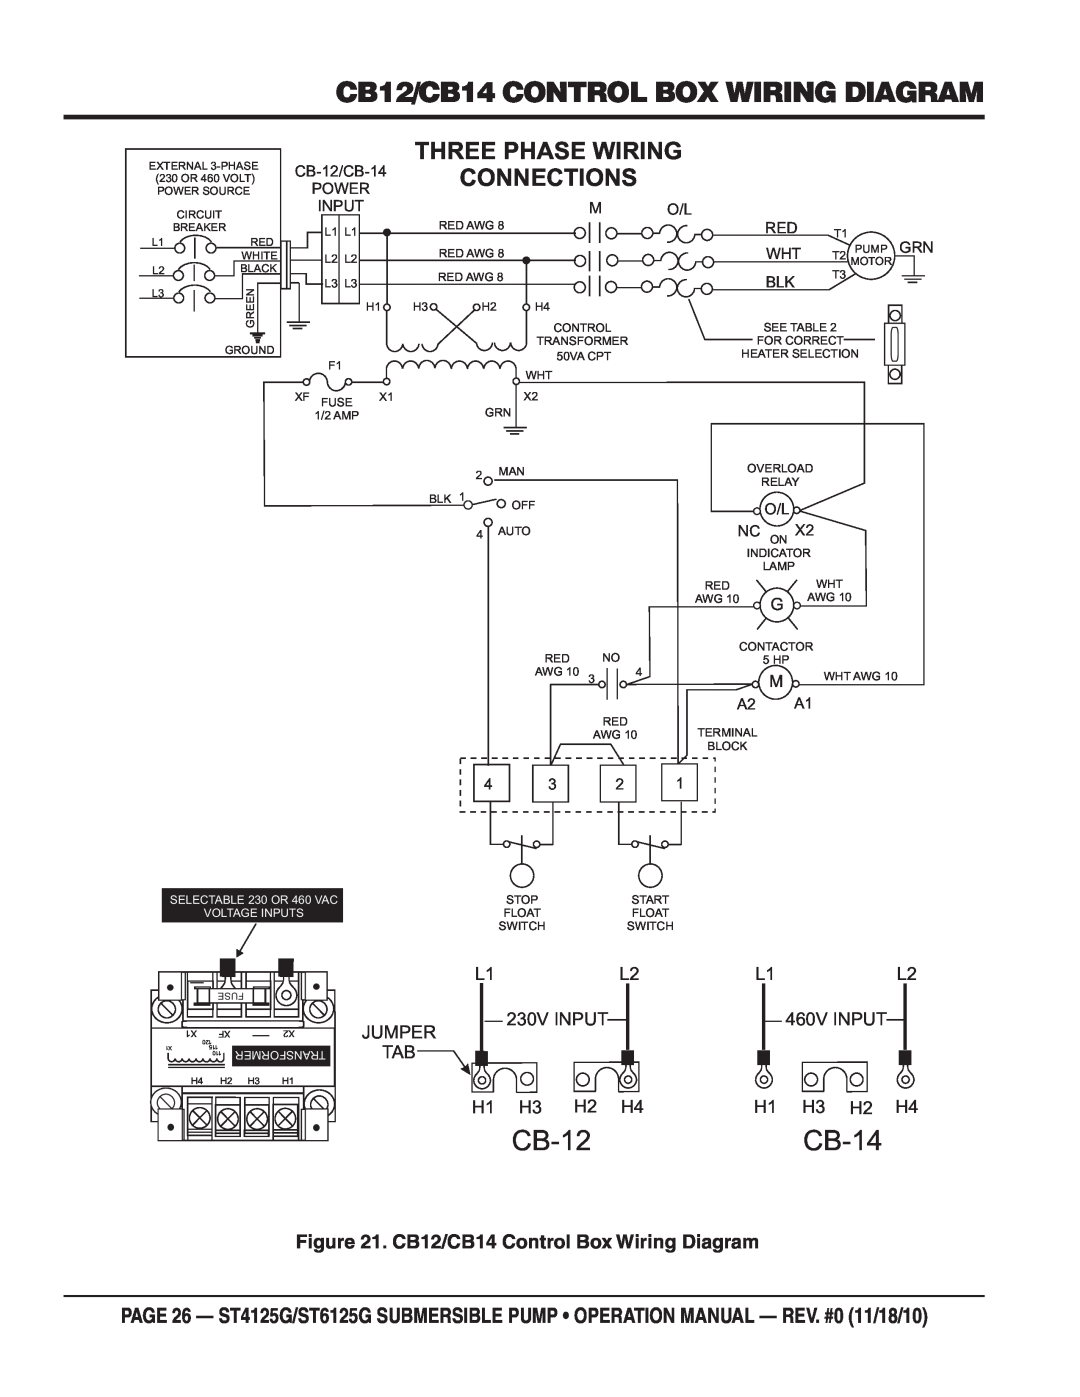 Multiquip ST6125G CB12/CB14 CONTROL BOX WIRING DIAGRAM, CB-12, CB-14, Three Phase Wiring, Connections, L1L2, Jumper Tab 